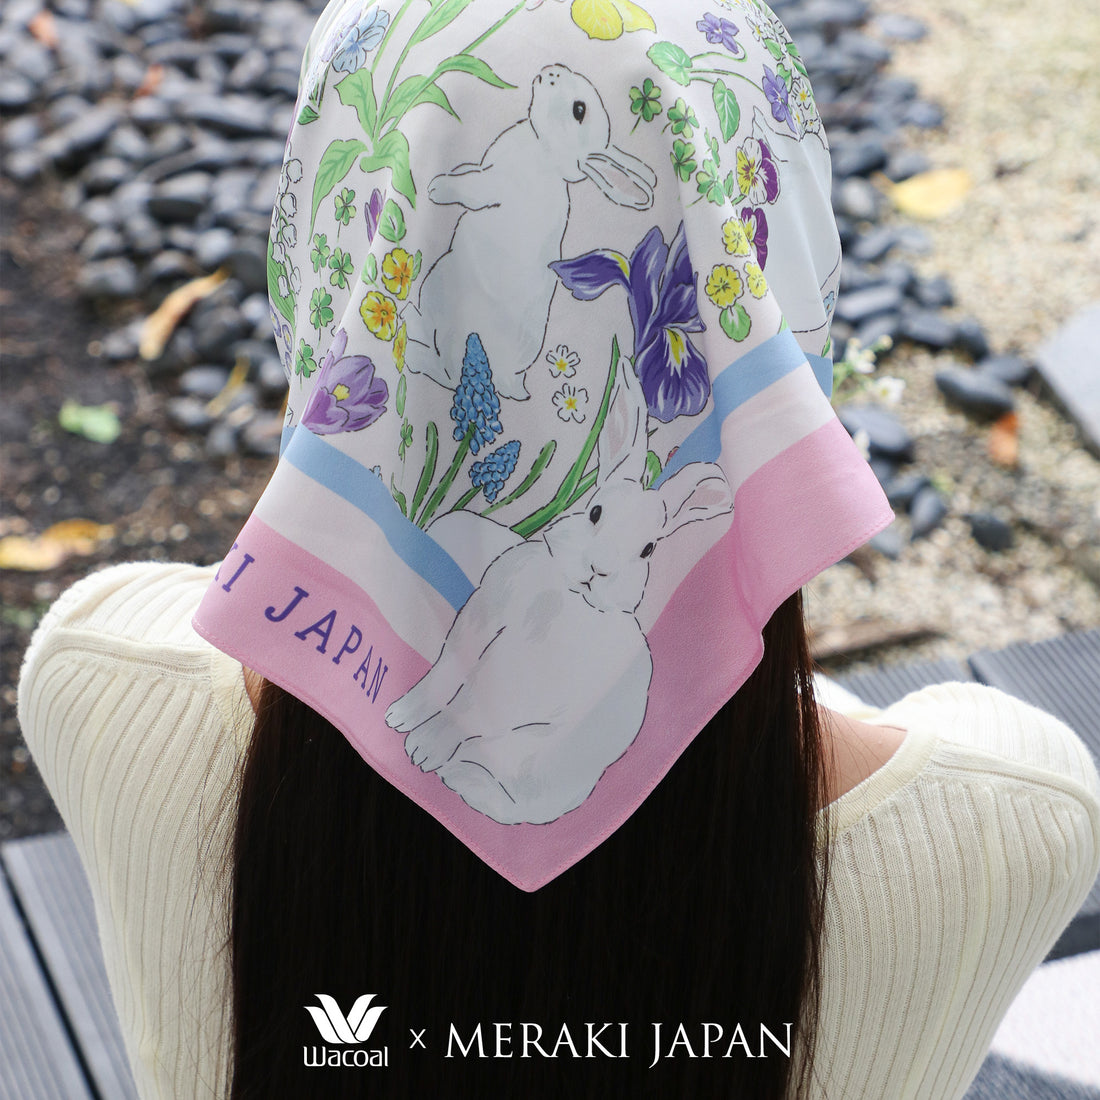 Wacoal x Meraki Rabbit in the Garden shawl/multi-purpose cover, model WW120300PI, pink (PI)